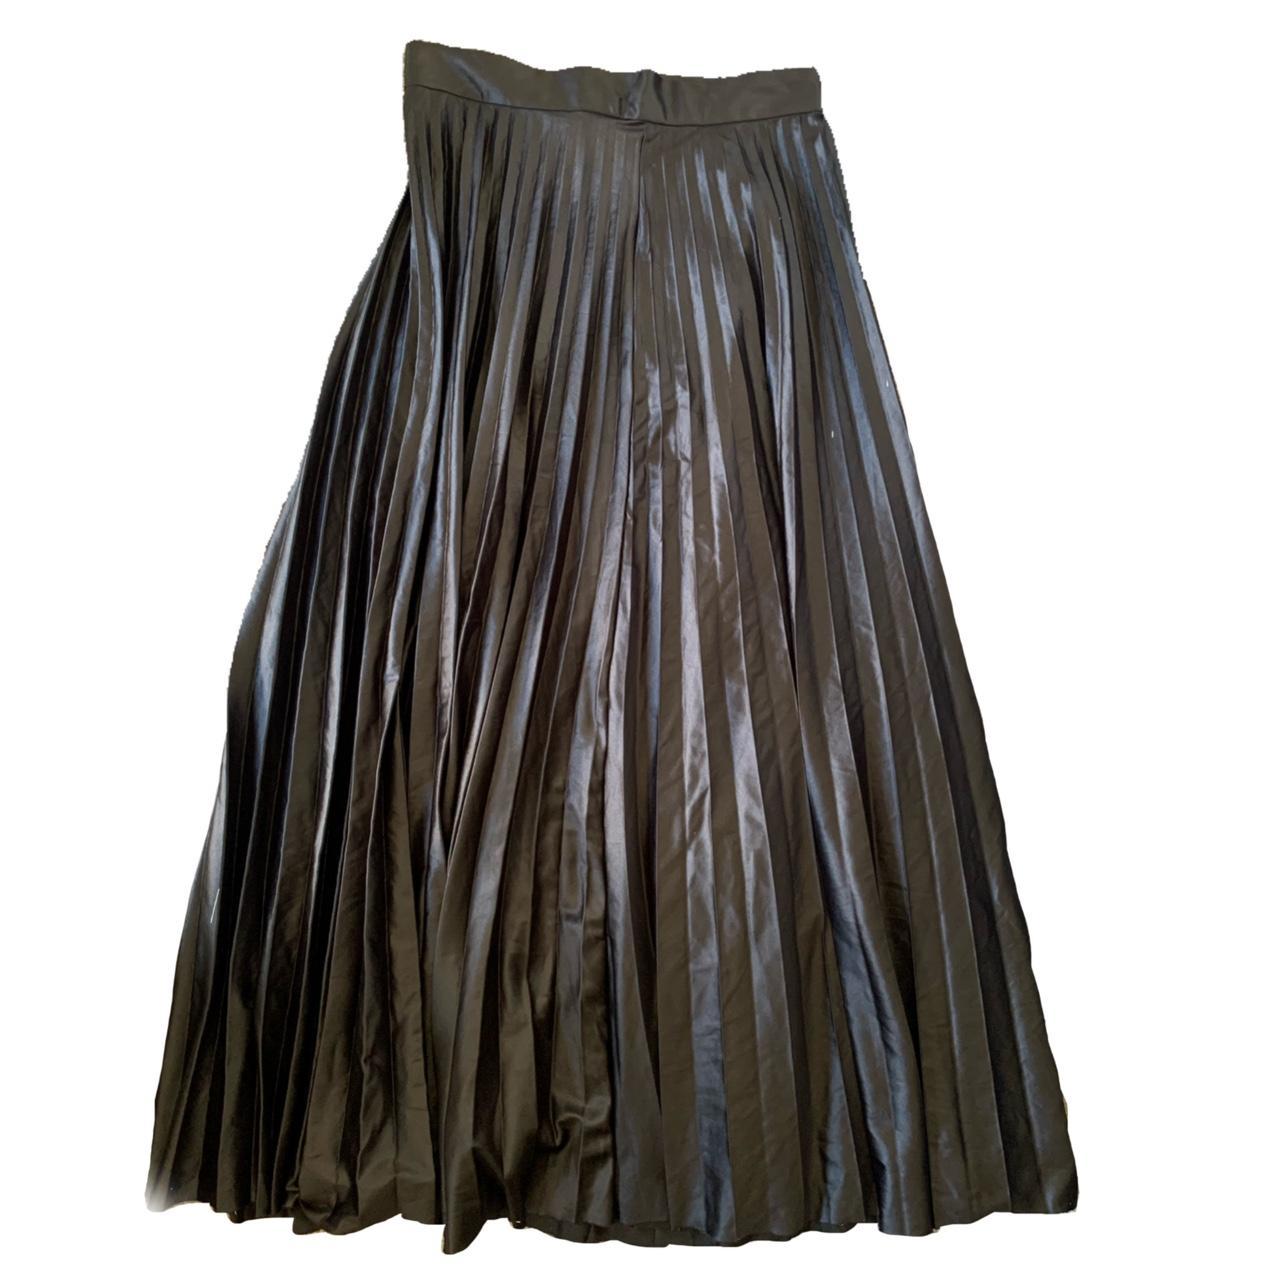 ˗ˏˋ long black pleated skirt ˎˊ˗ - brand is... - Depop